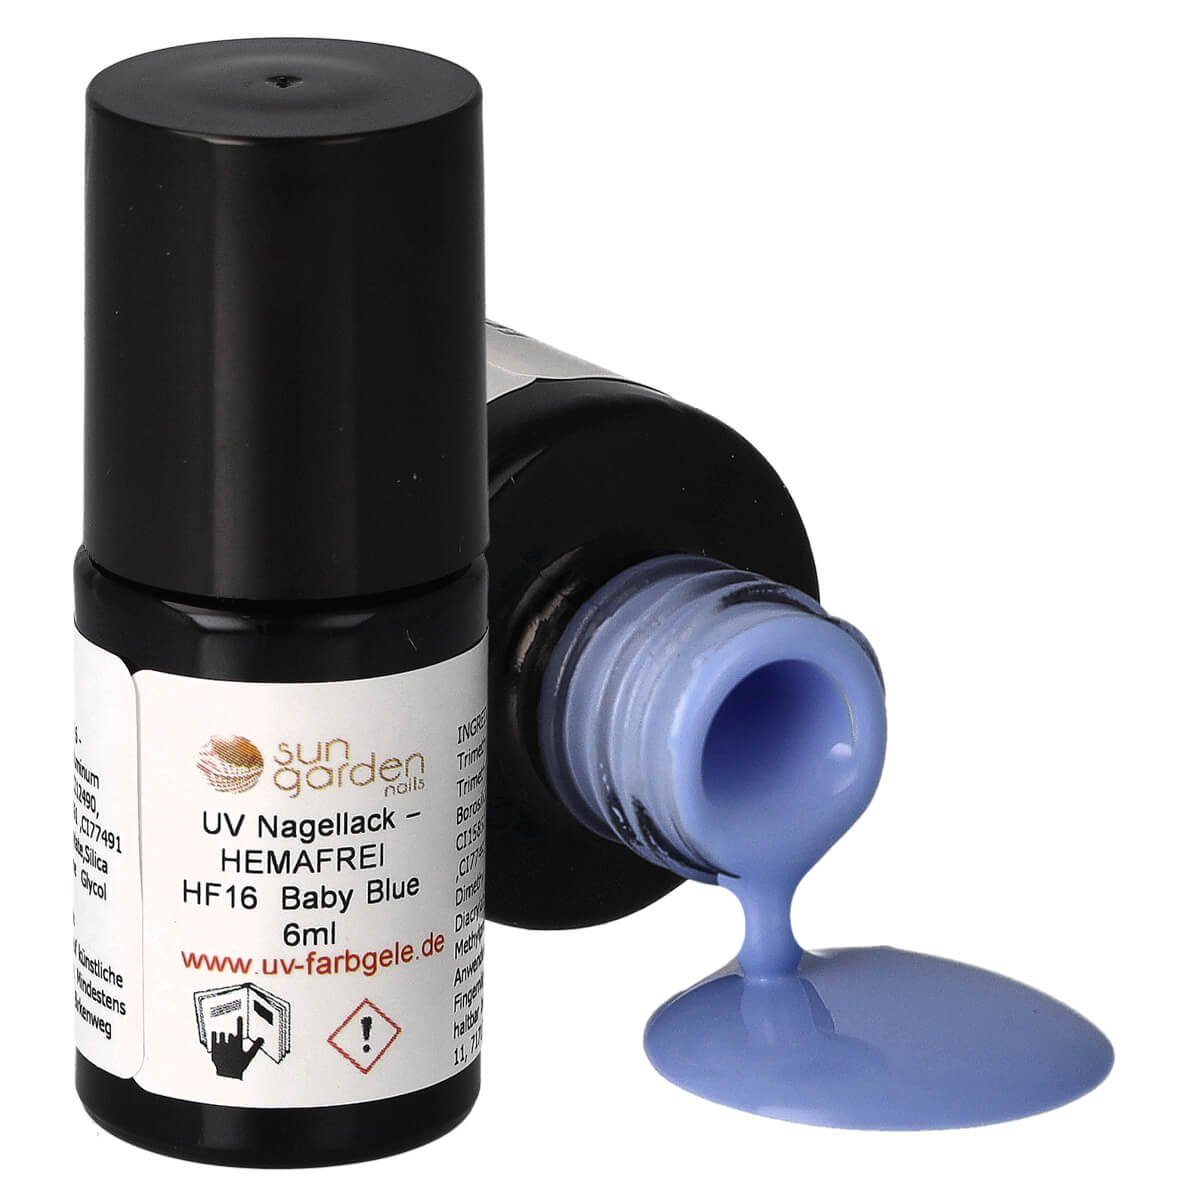 Sun Garden Nails Nagellack HF16 Baby Blue - UV Nagellack 6ml – HEMAFREI